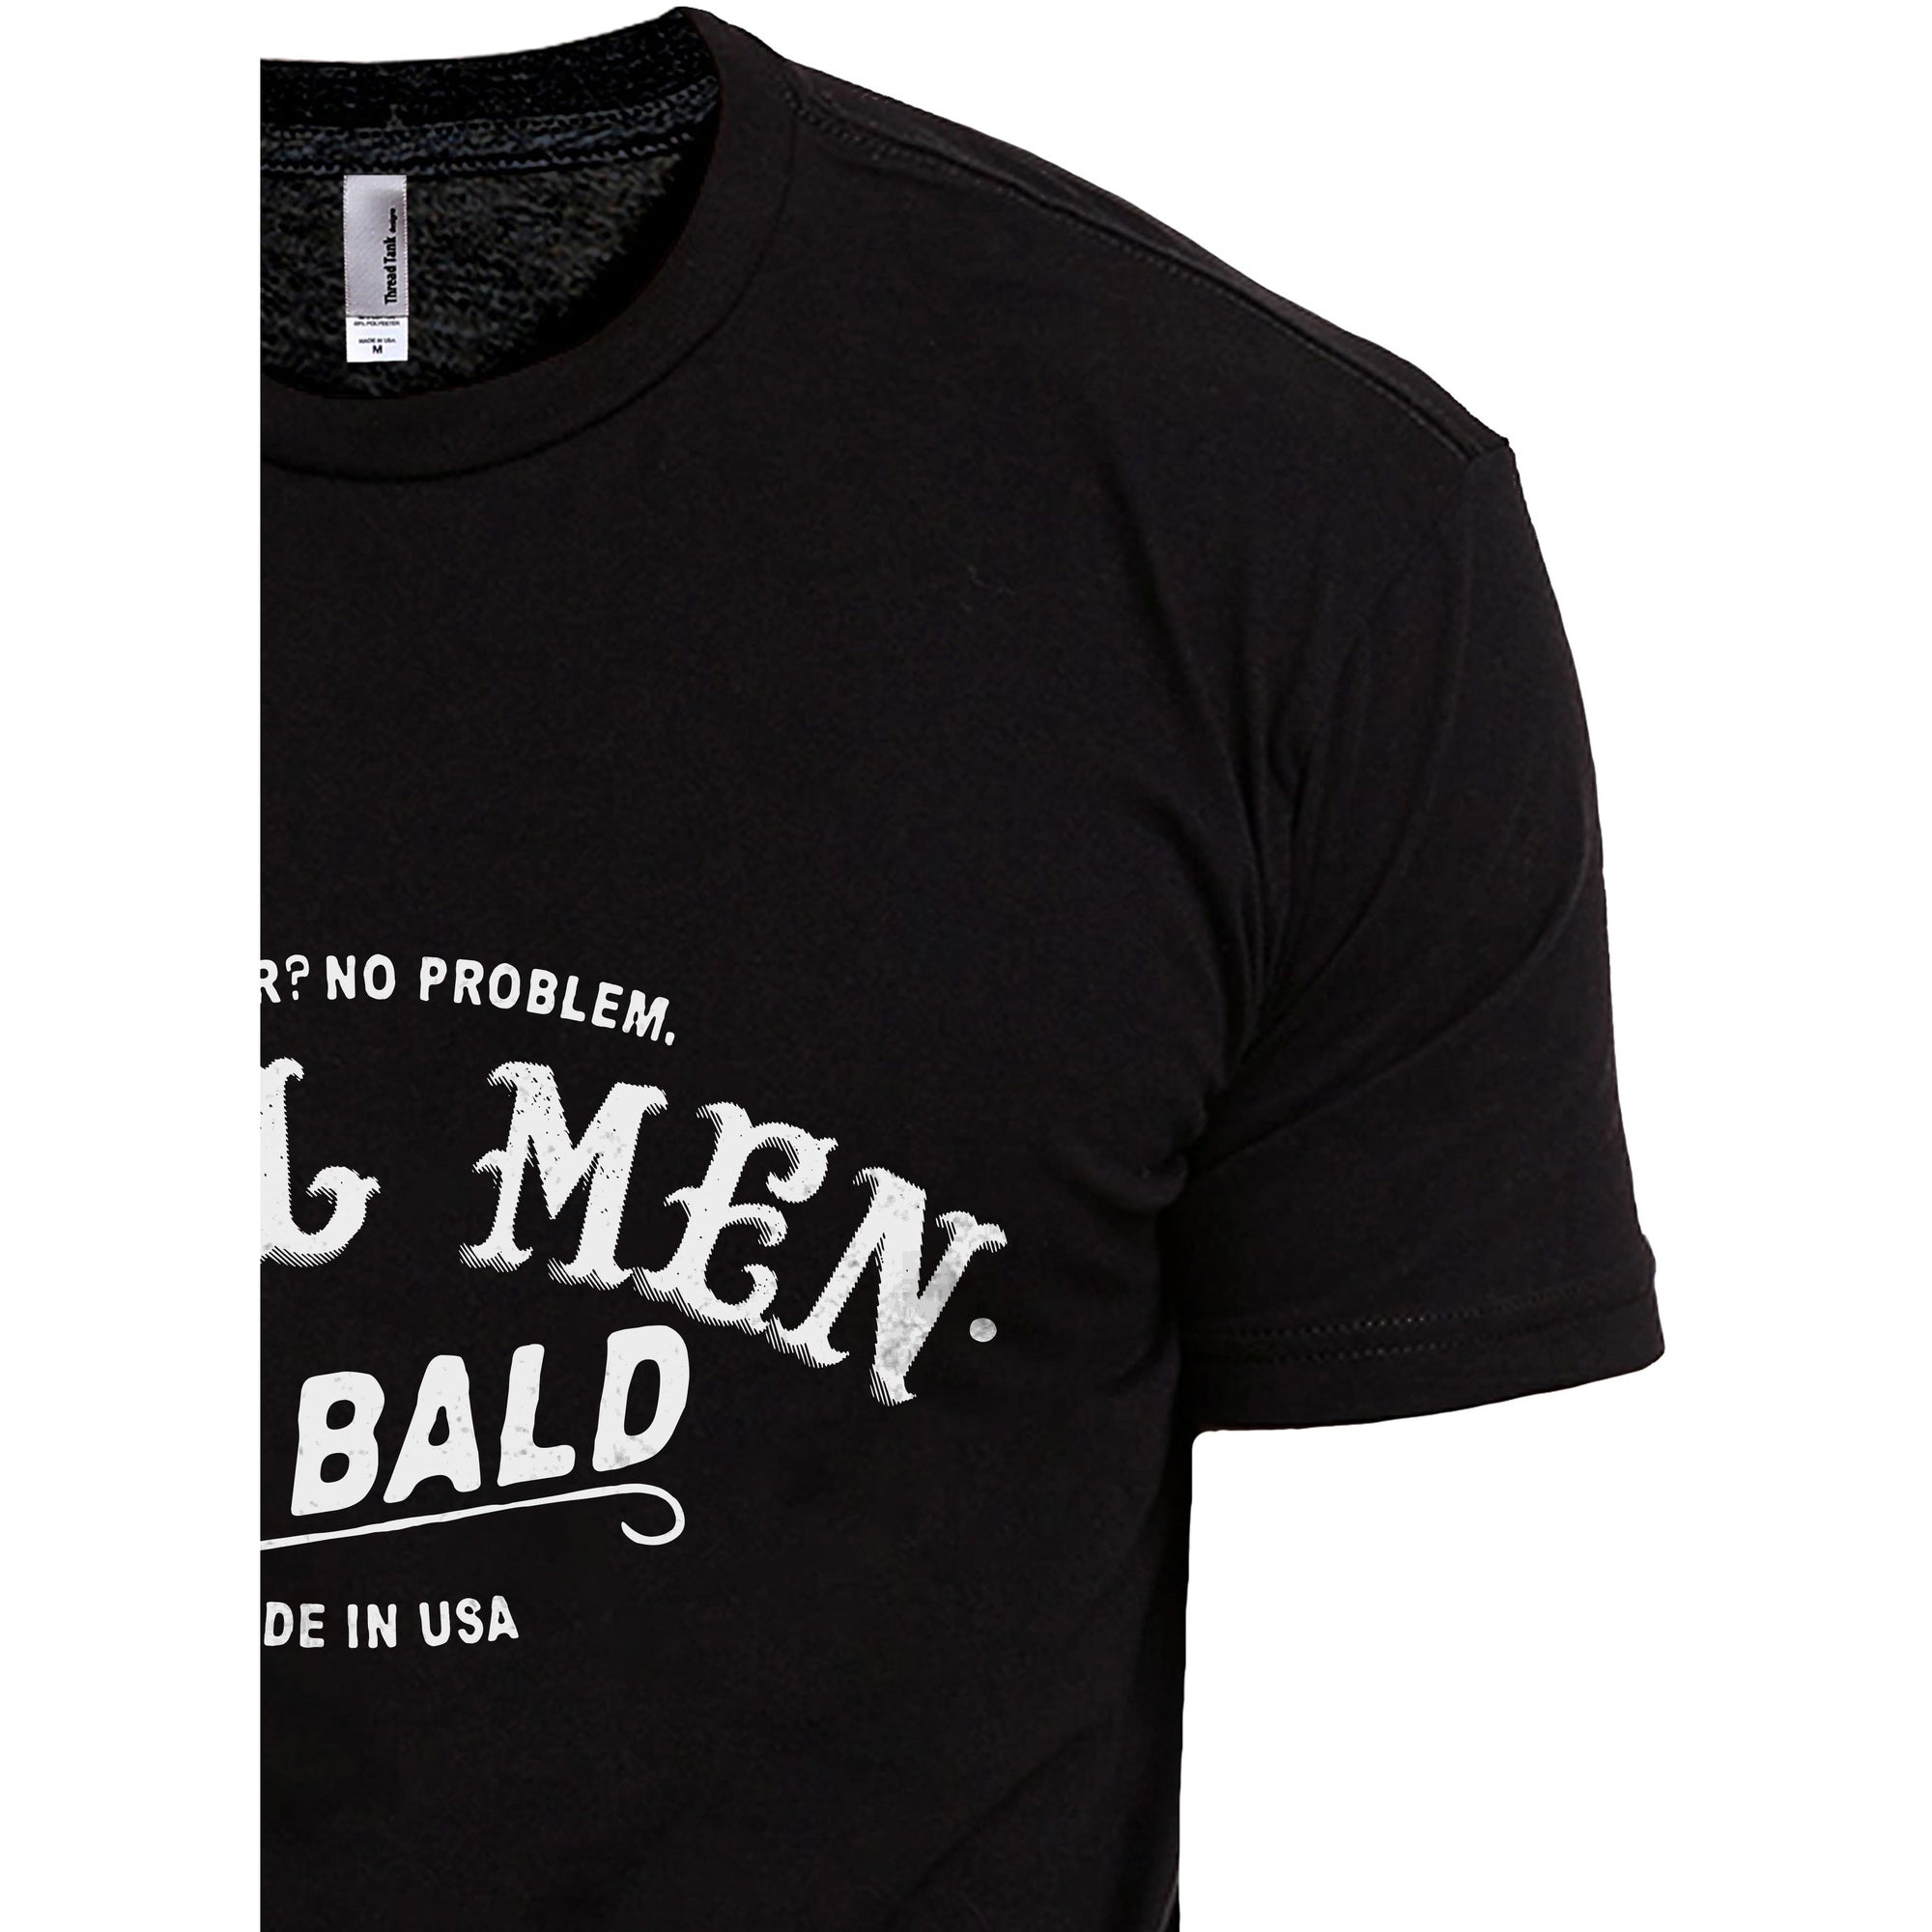 Real Men Go Bald Black Printed Graphic Men's Crew T-Shirt Tee Side View